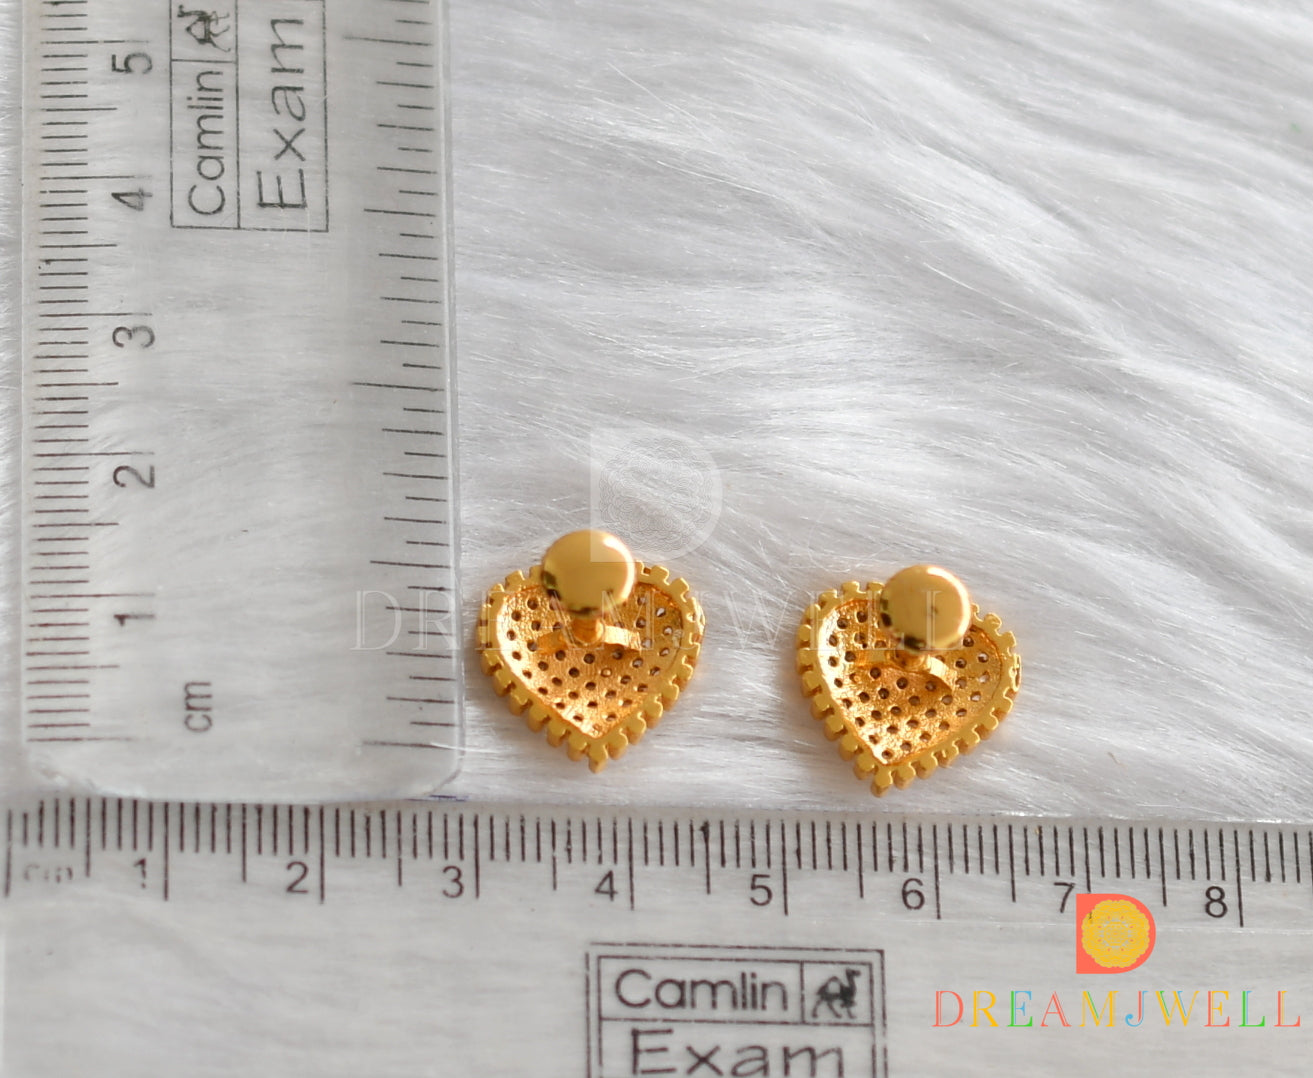 Gold tone white-ruby-emerald stone heart earrings dj-37605